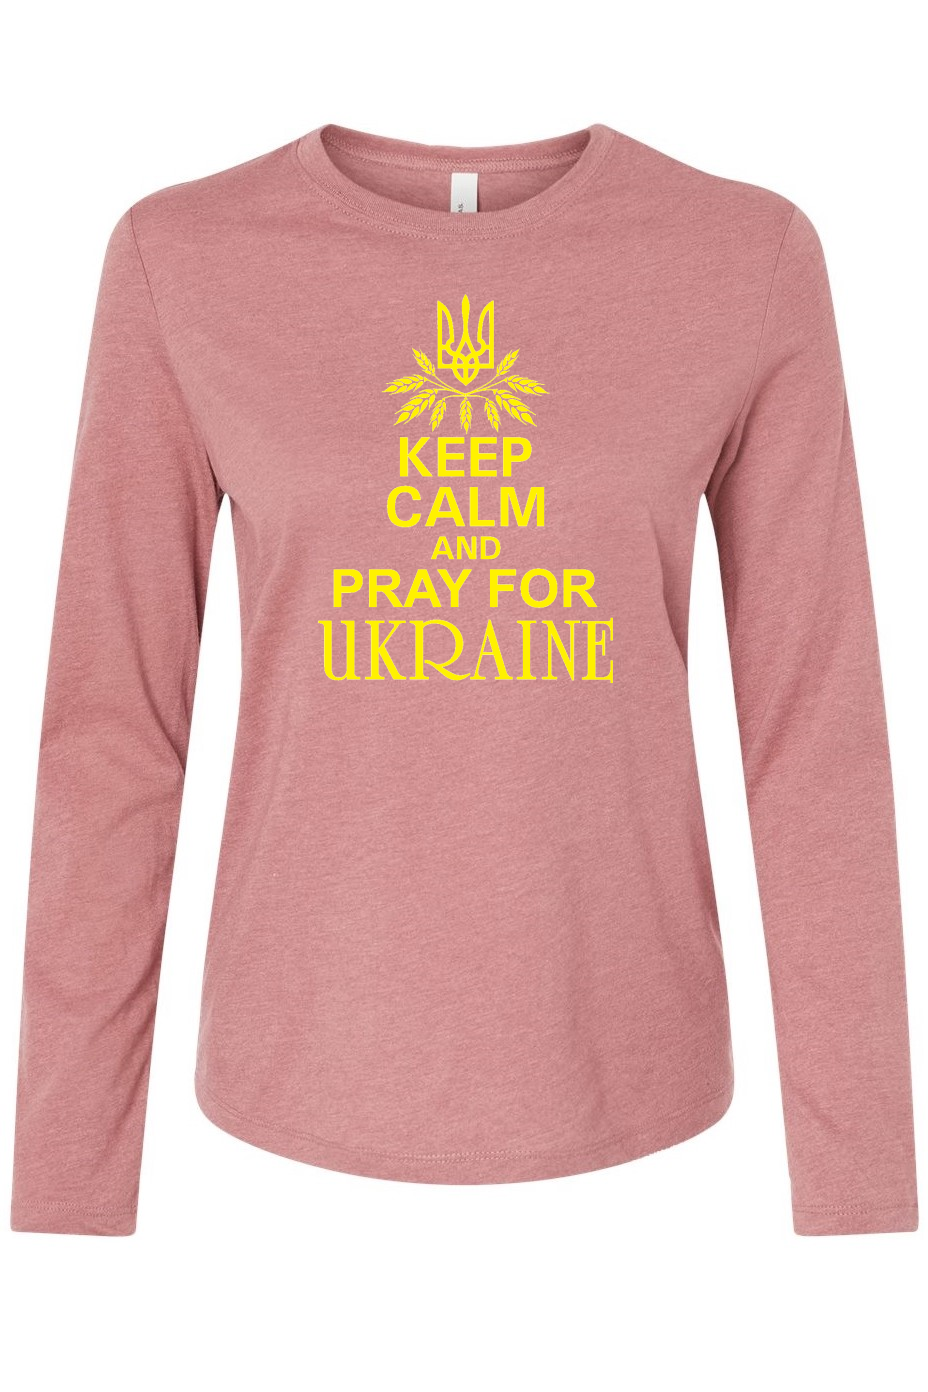 Female long sleeve top "Keep calm and pray for Ukraine"